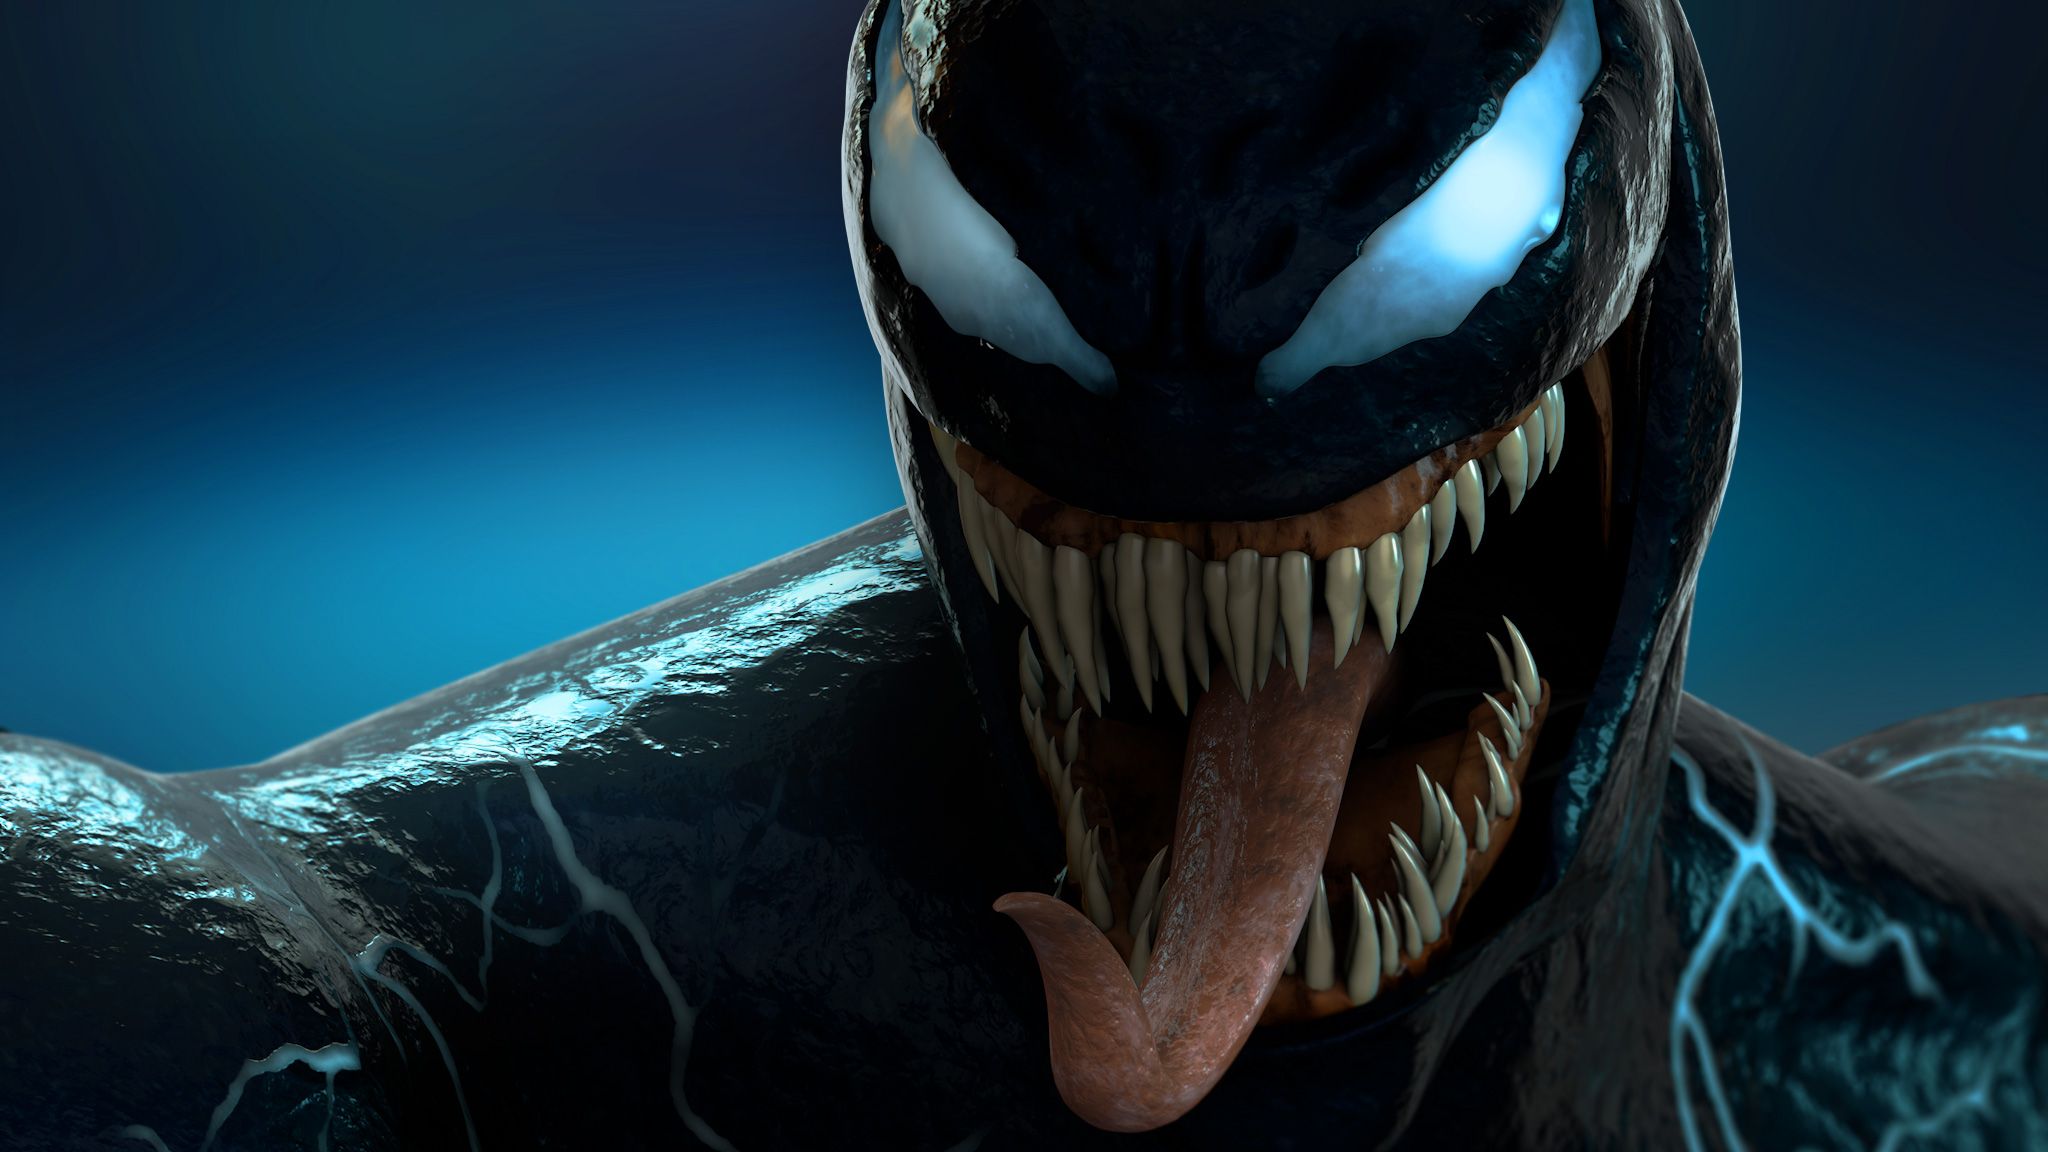 2048x1152 Venom 3D Digital Art, HD Superheroes, 4k Wallpaper, Image, Backgr...